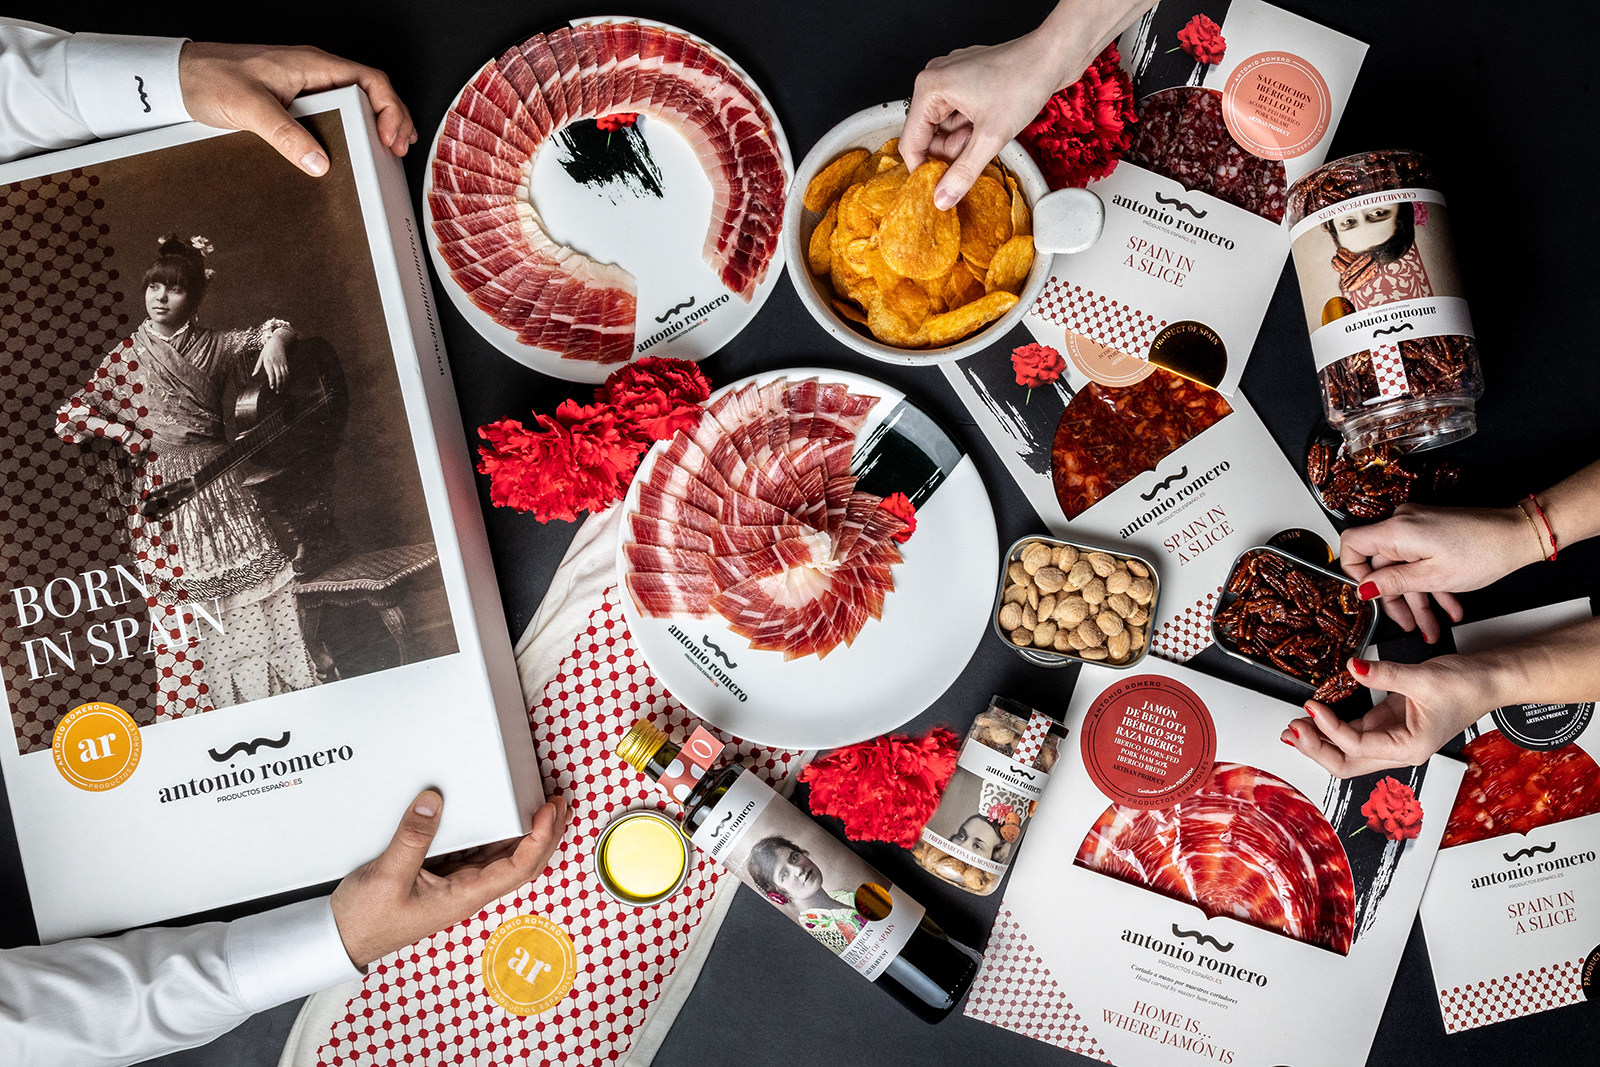 Exploring the Essence of Spanish Culture Through Antonio Romero's Gourmet Product Packaging